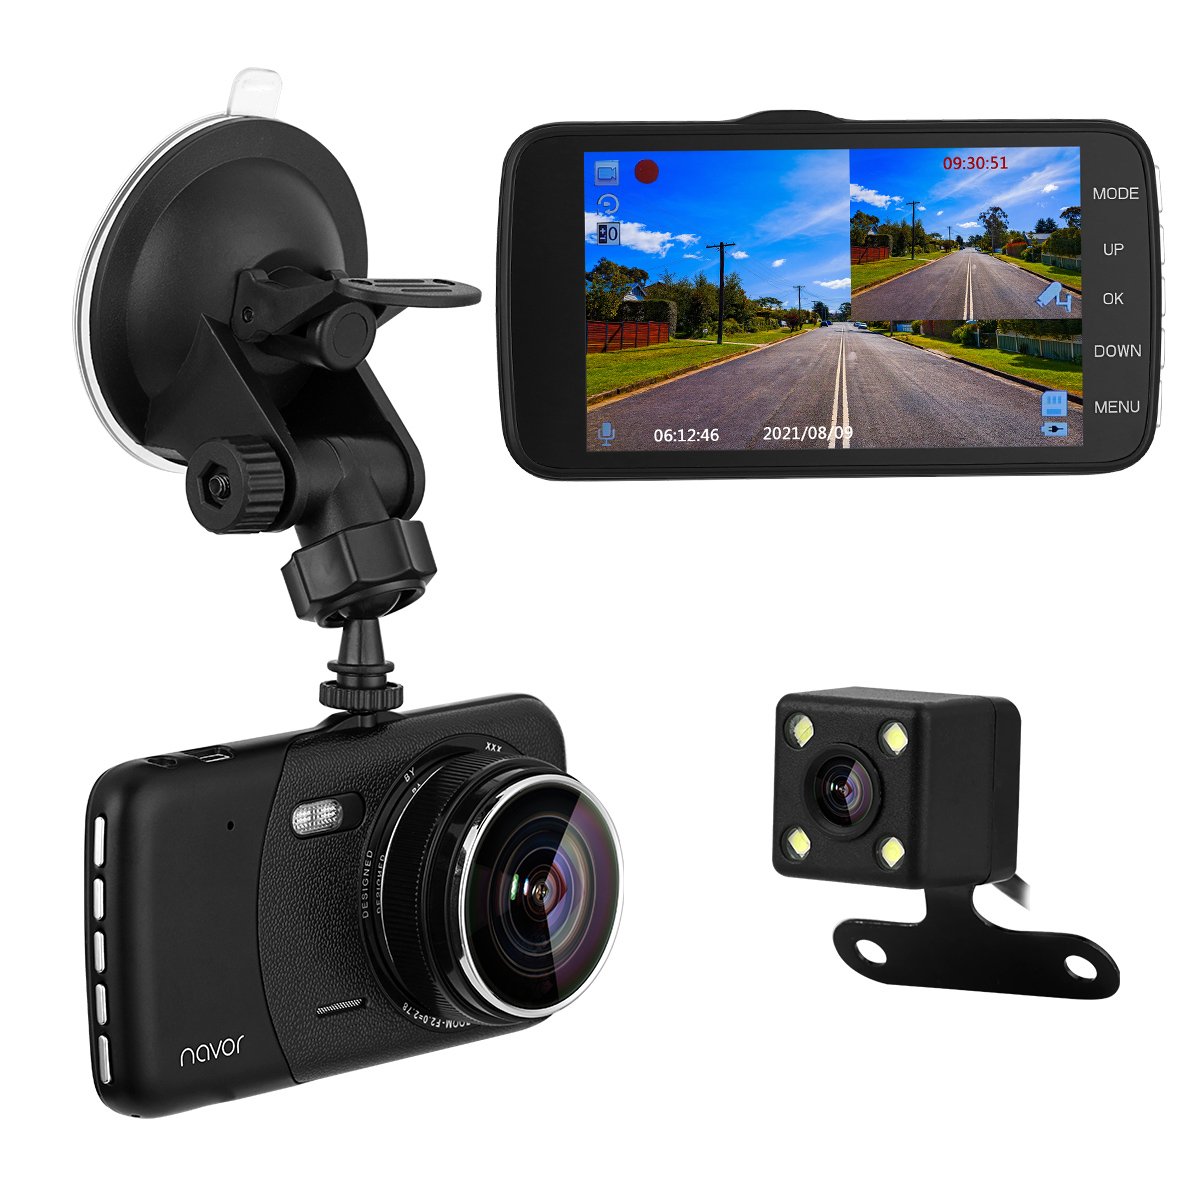 navor Upgraded Dual Lens Dash Cam Full HD 1080P 170° 4.0 Inch Screen Front Camera and Waterproof Rear Camera